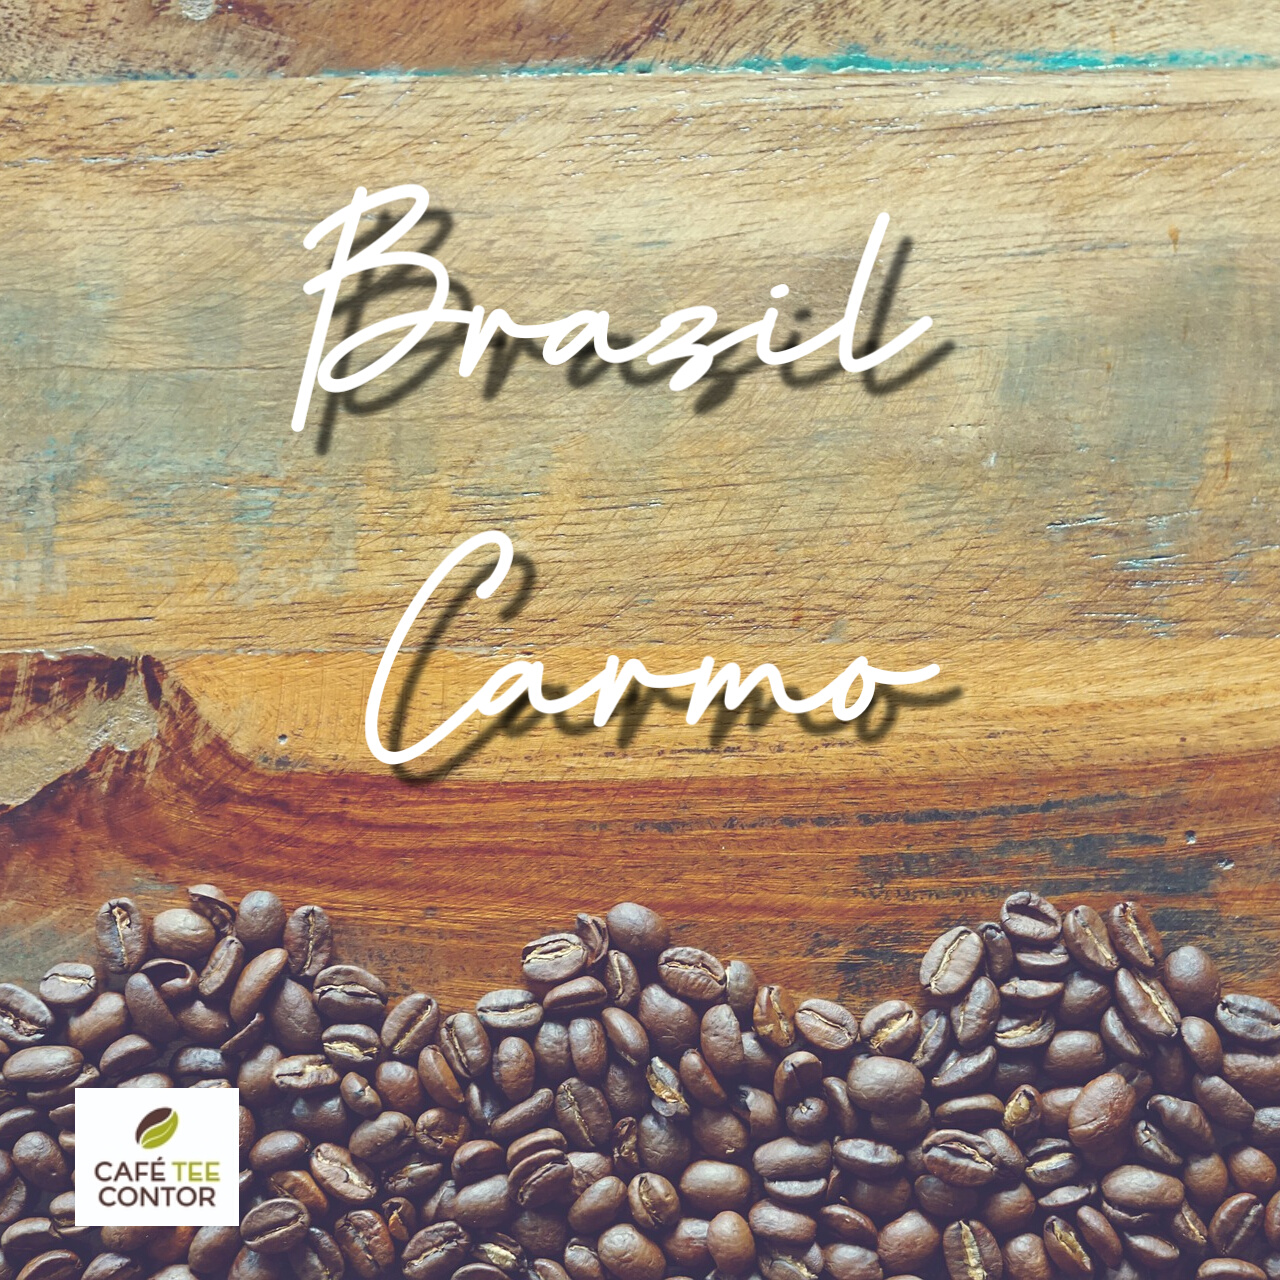 Kaffee Brazil Carmo